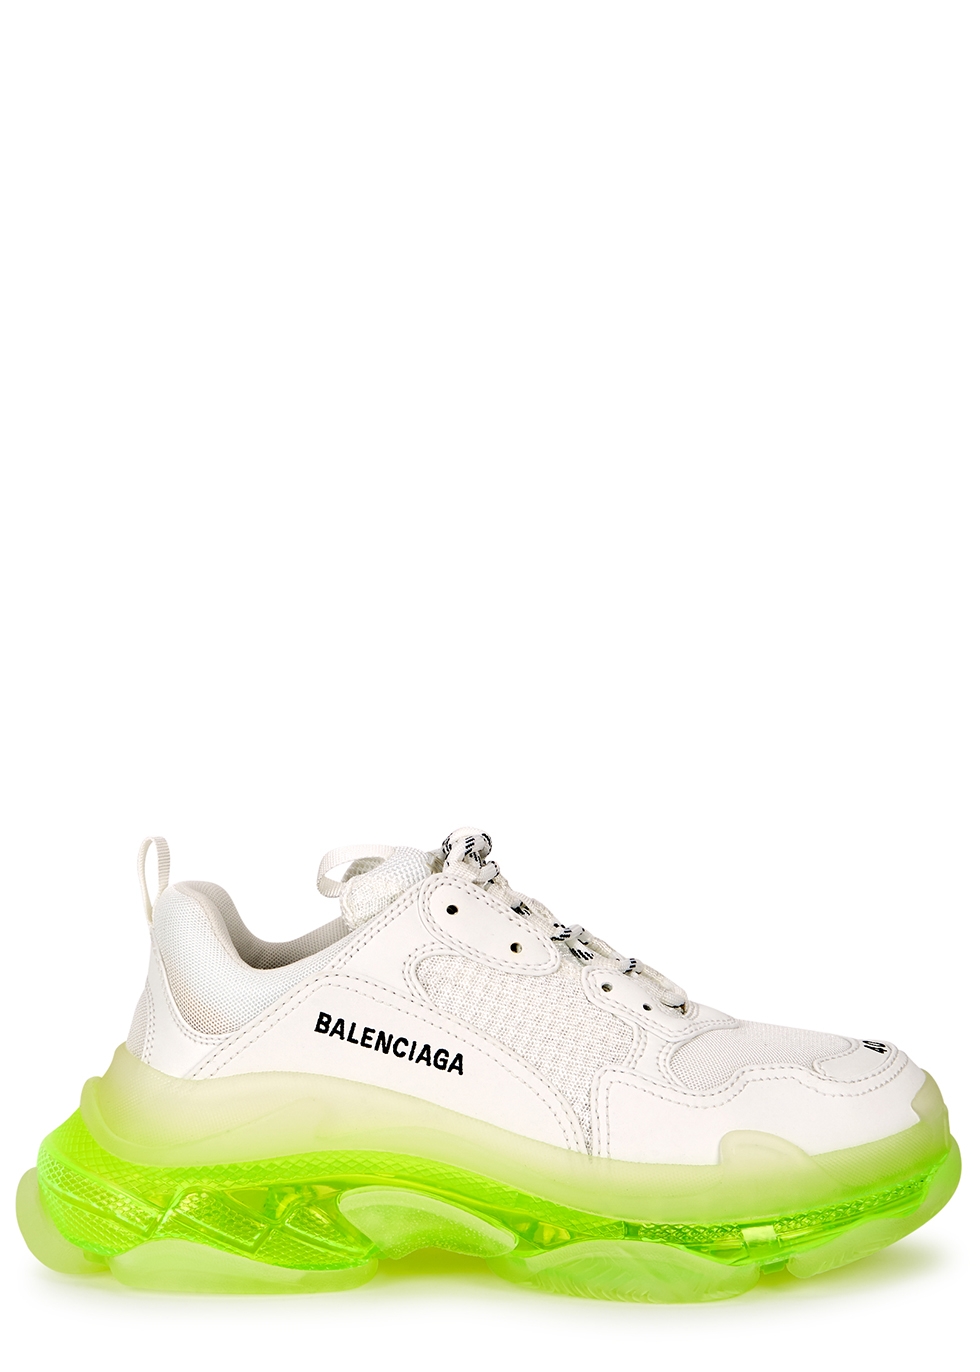 Balenciaga Triple S white mesh sneakers 